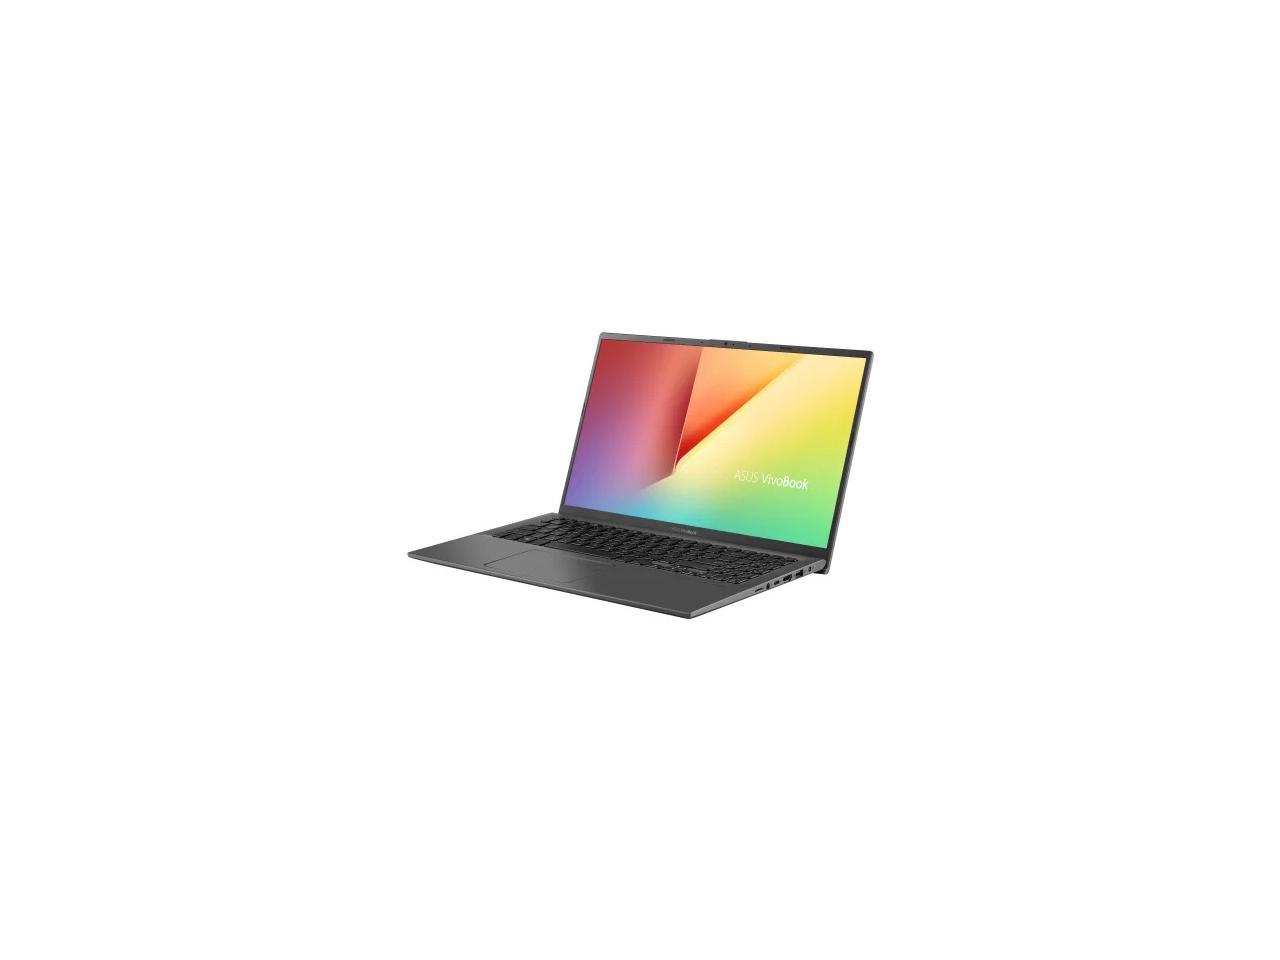 ASUS VivoBook 15 Laptop: Core i7-1065G7, 256GB SSD, 8GB RAM, 15.6